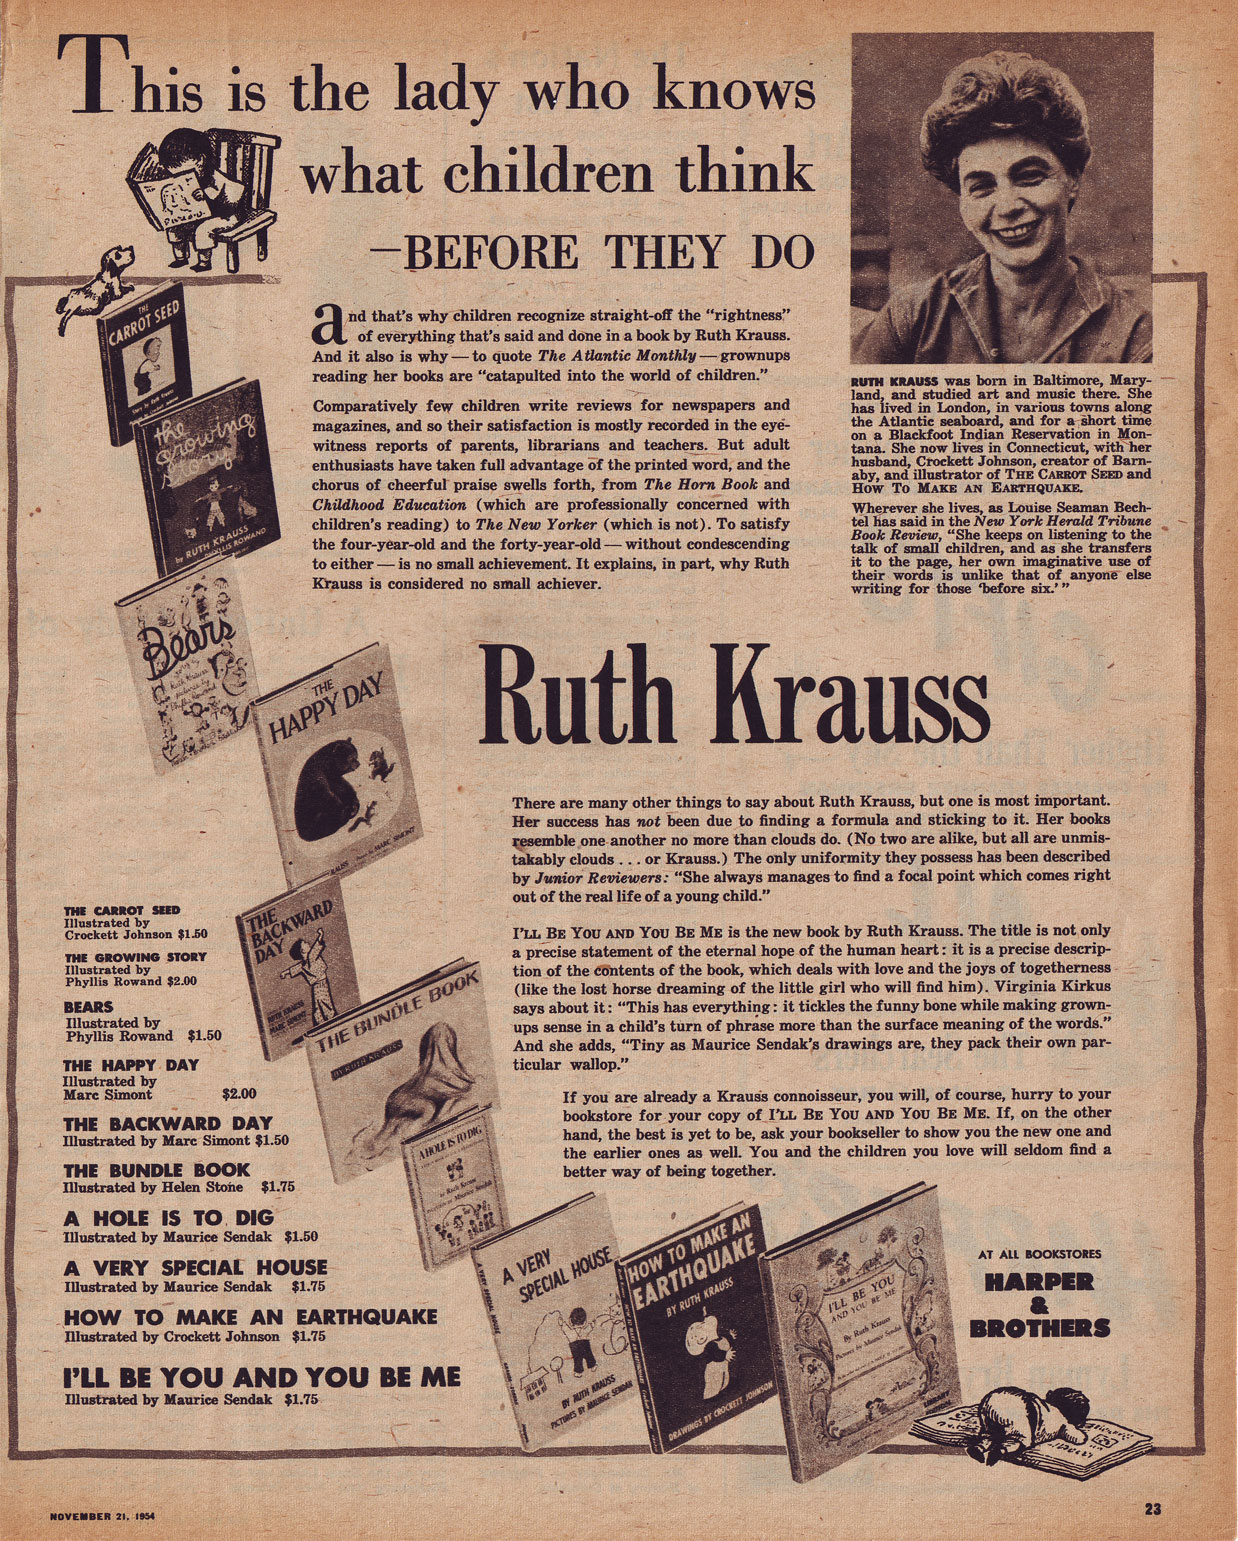 Ruth Krauss: Harper advertisement, 1954